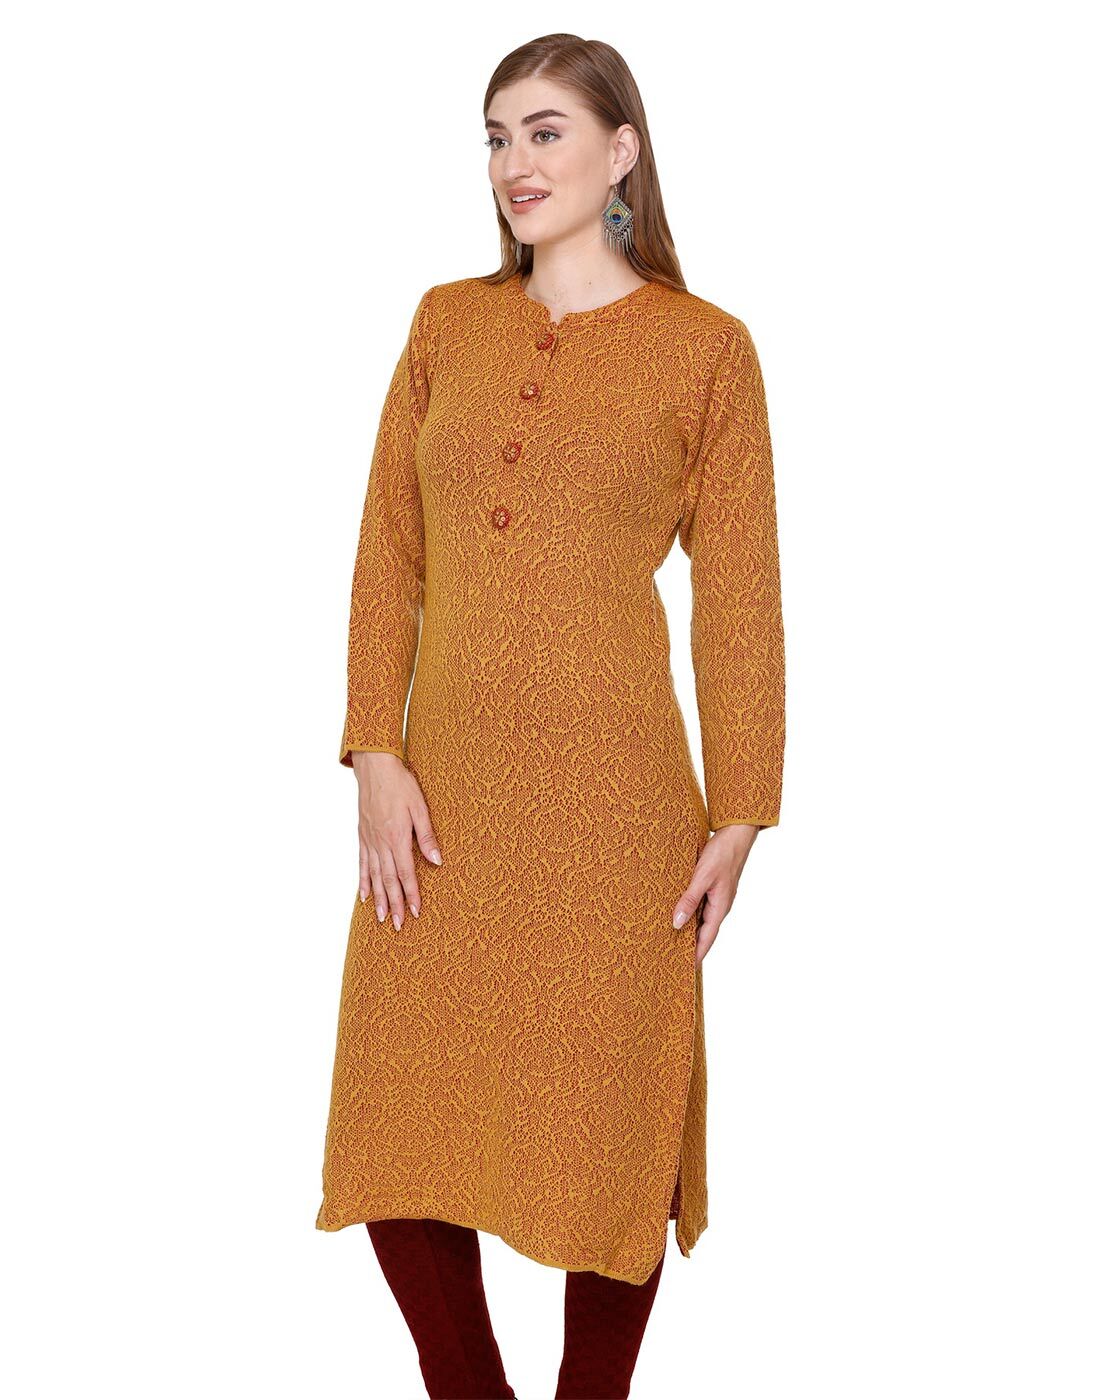 Knitted Woolen Fancy Kurti at Rs 400 in Ludhiana | ID: 16536063148